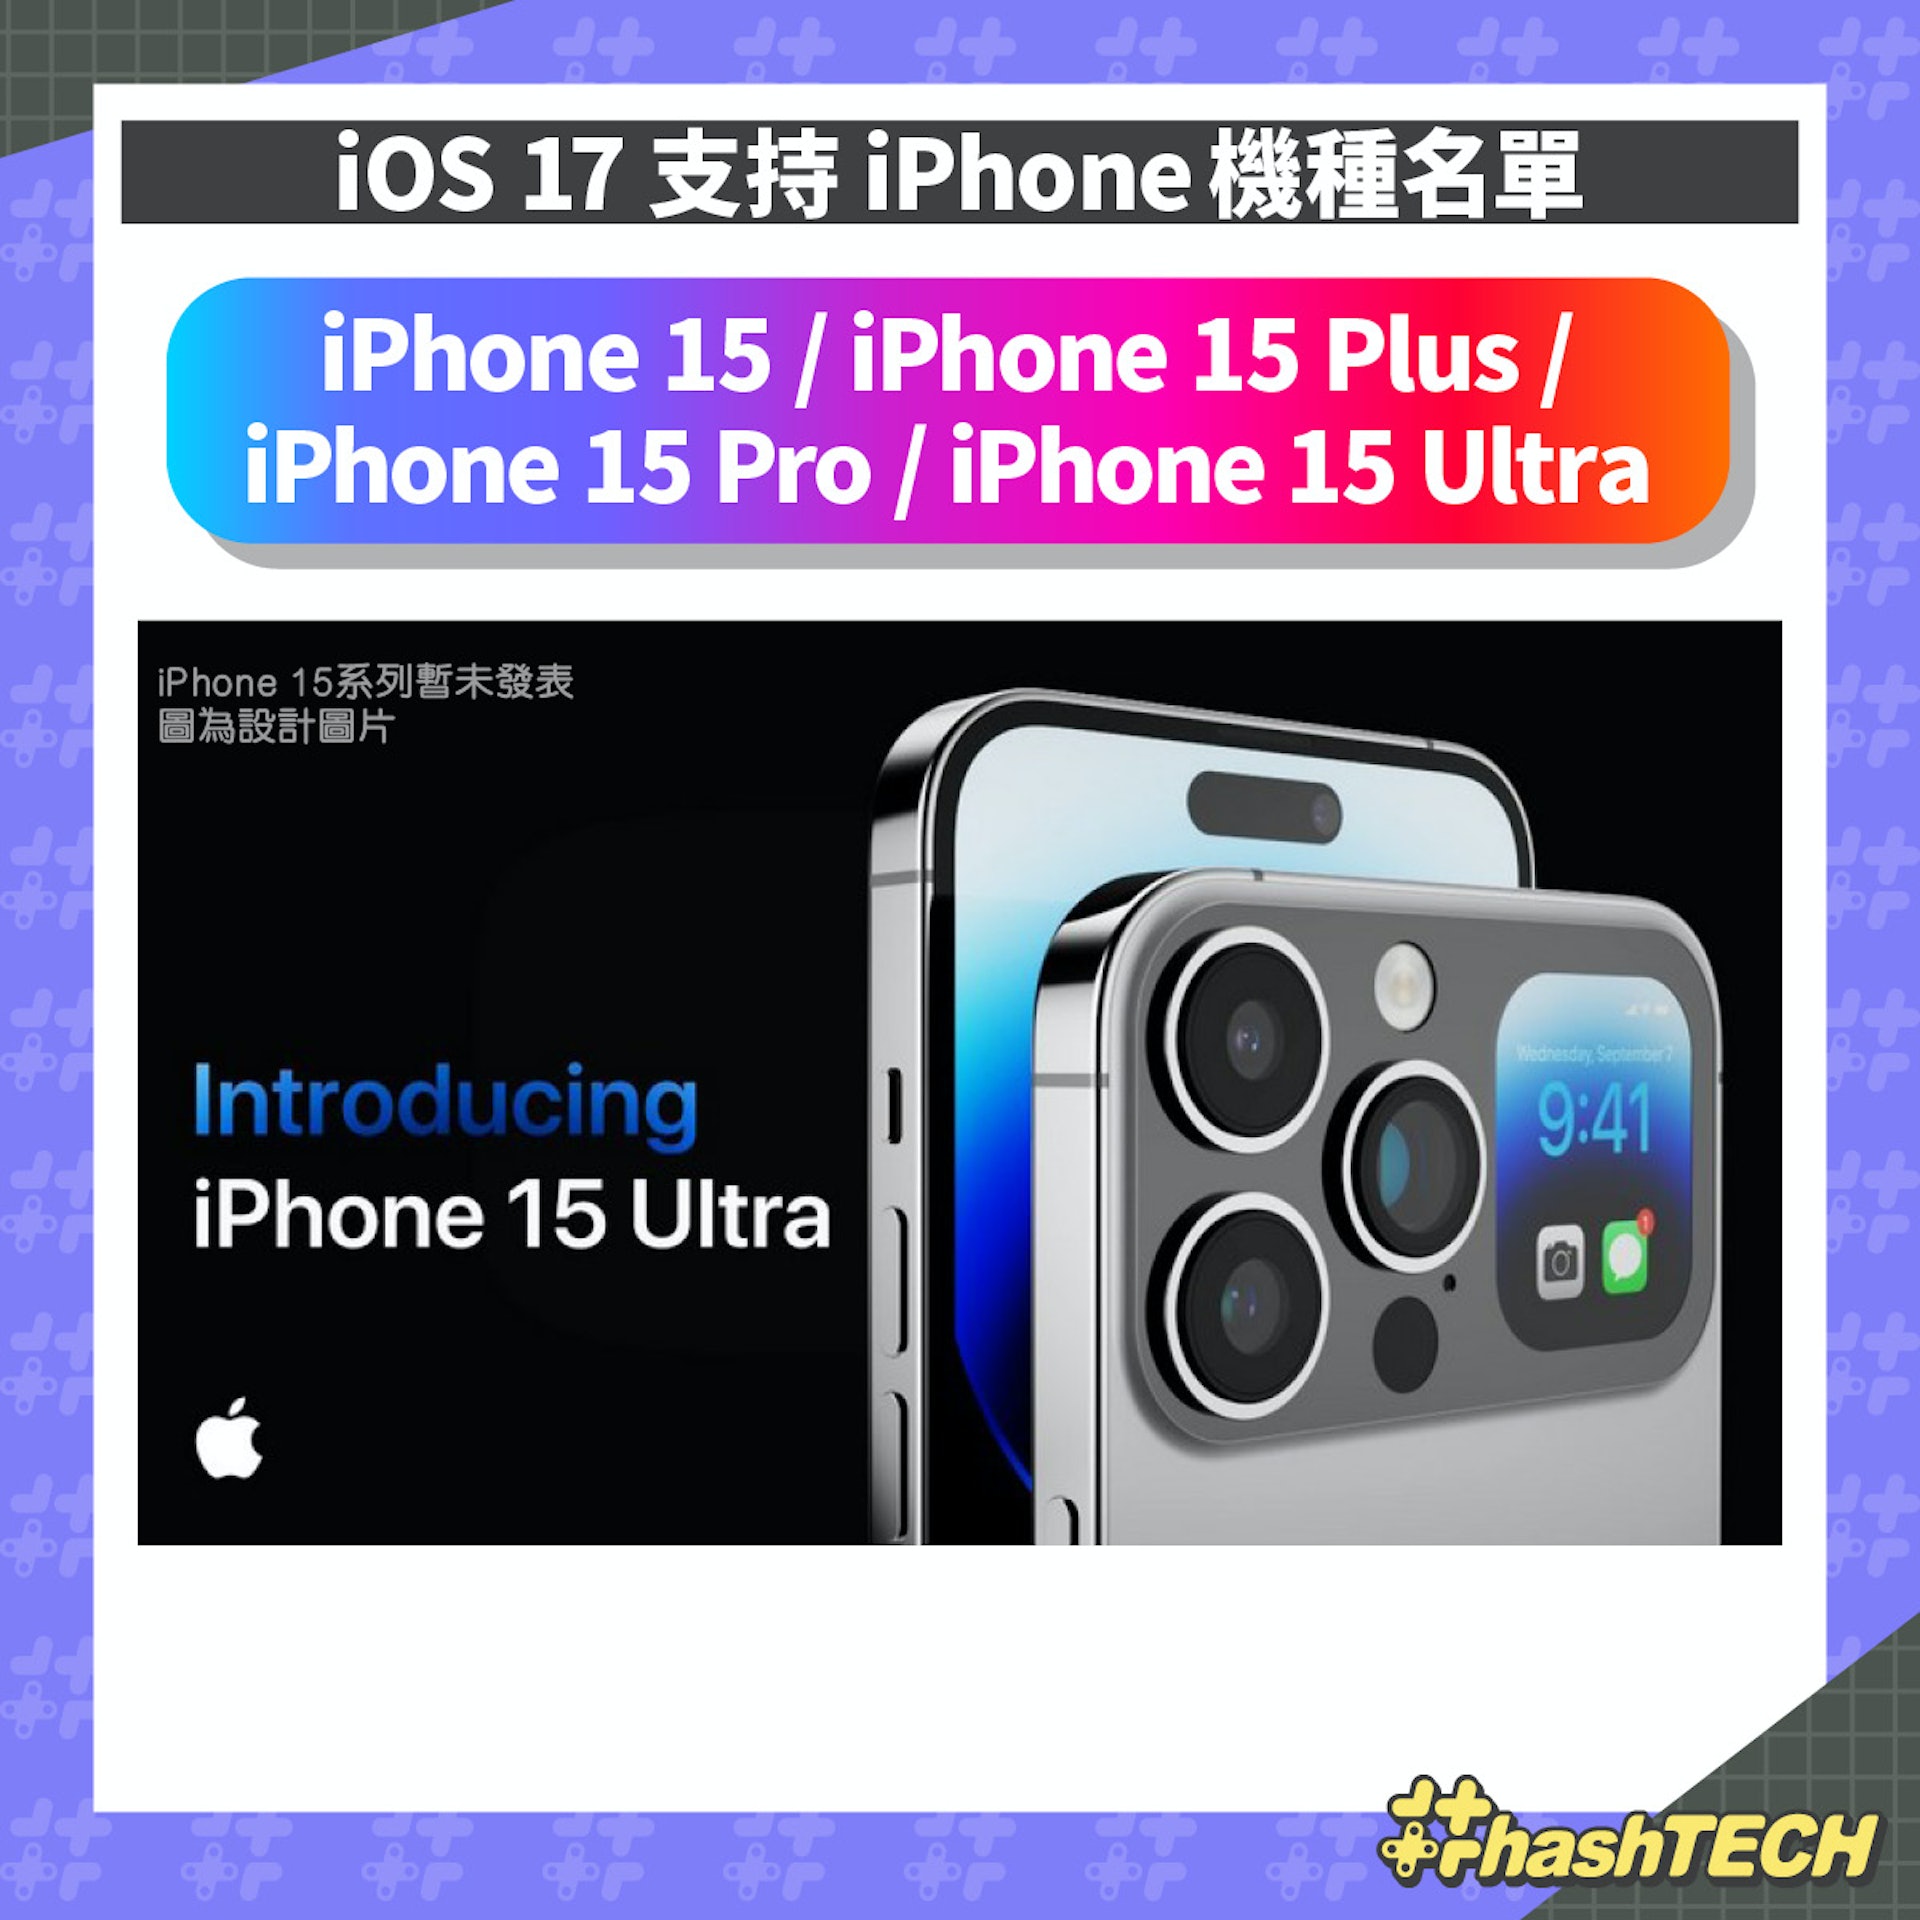 iOS 17 支持 iPhone機種名單